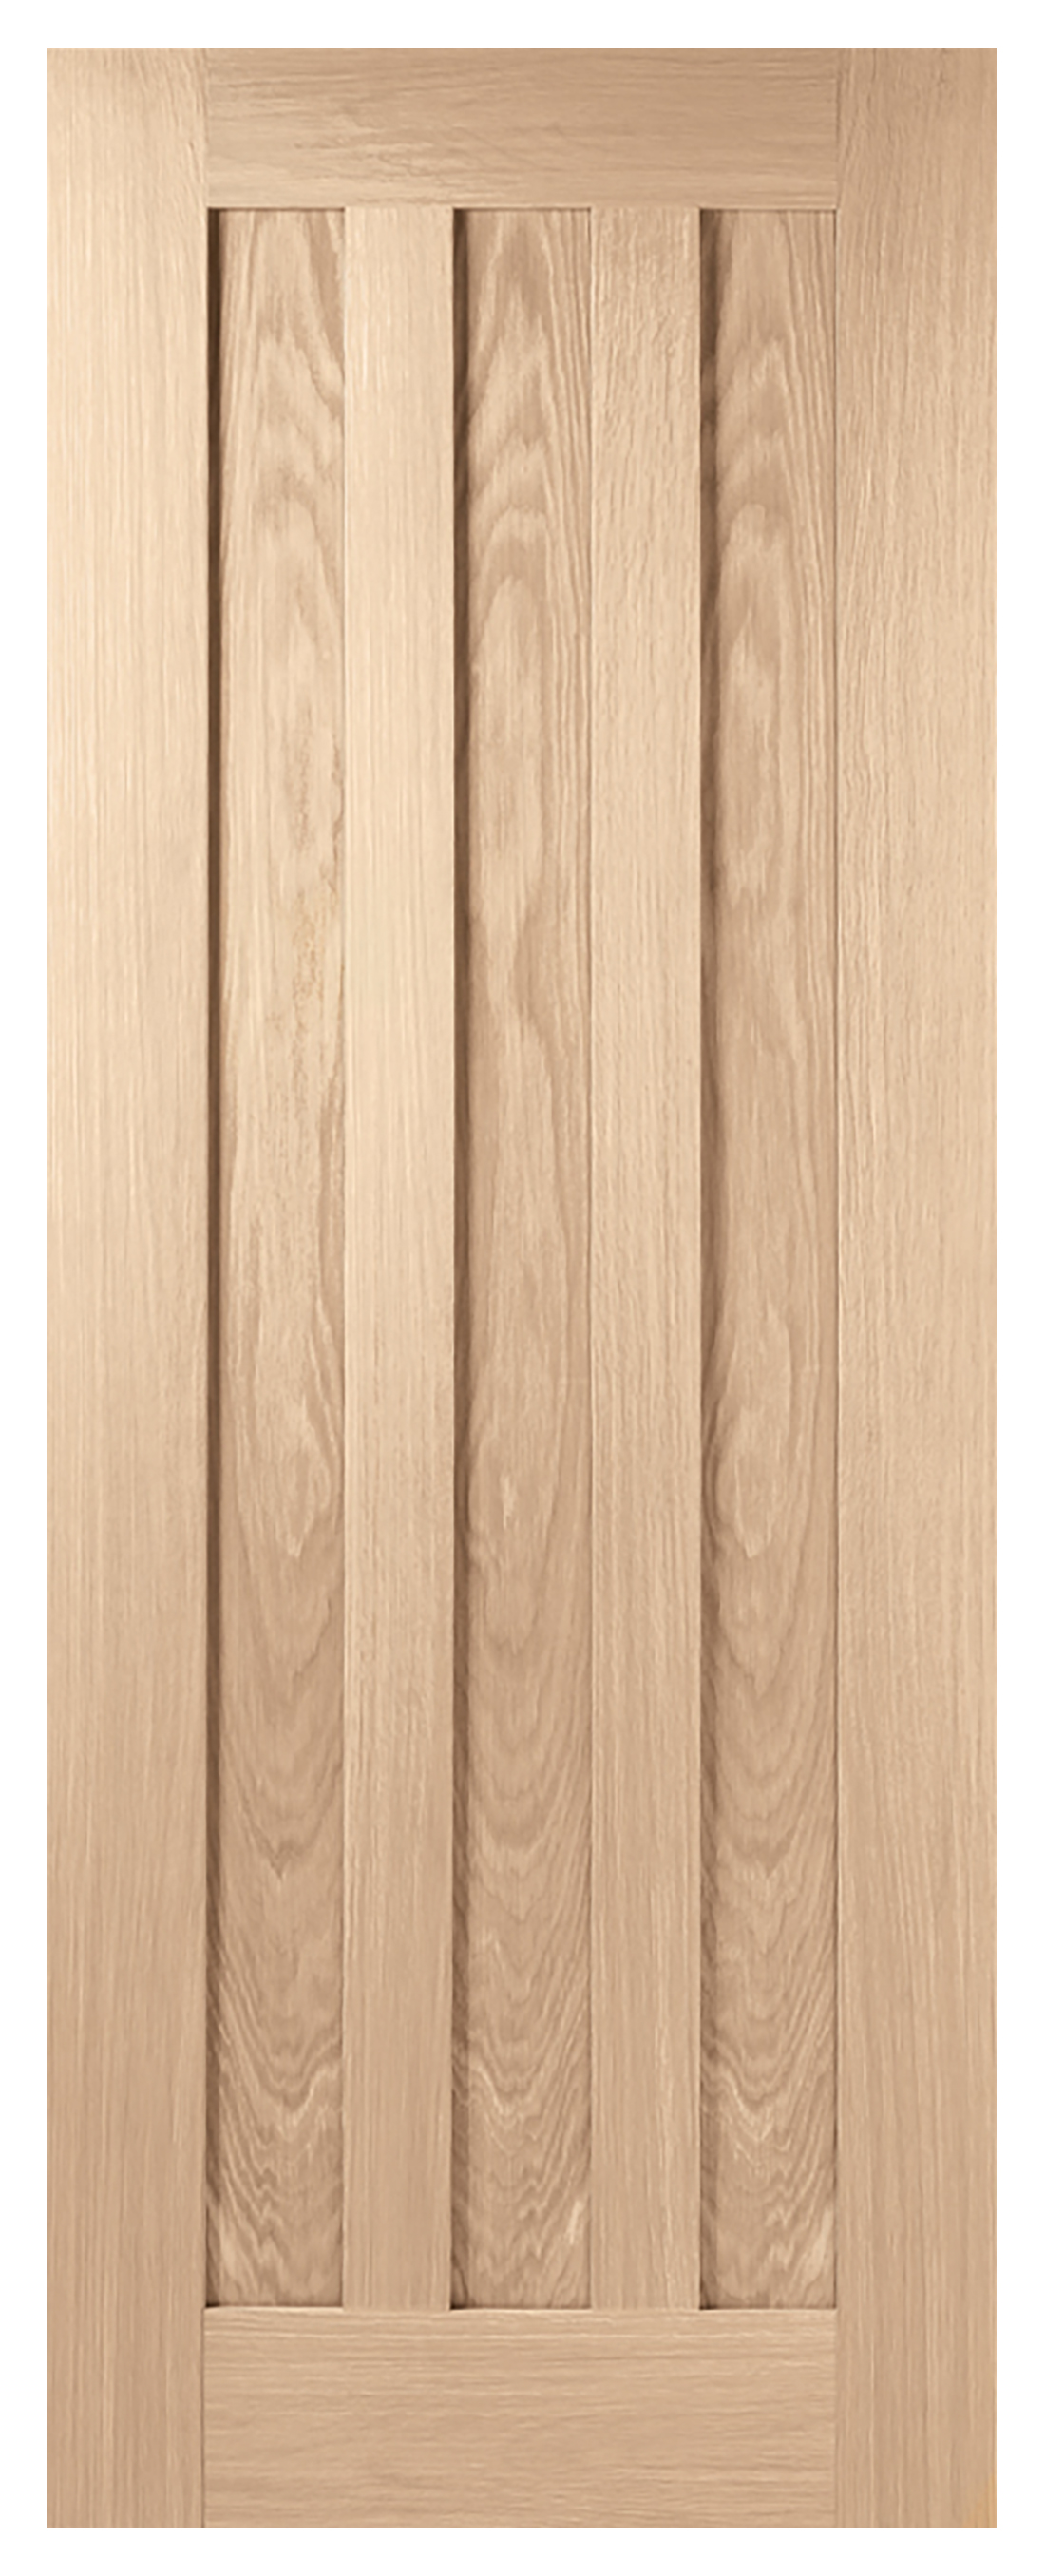 Image of LPD Internal Idaho 3 Panel Unfinished Oak FD30 Fire Door - 826 x 2040mm